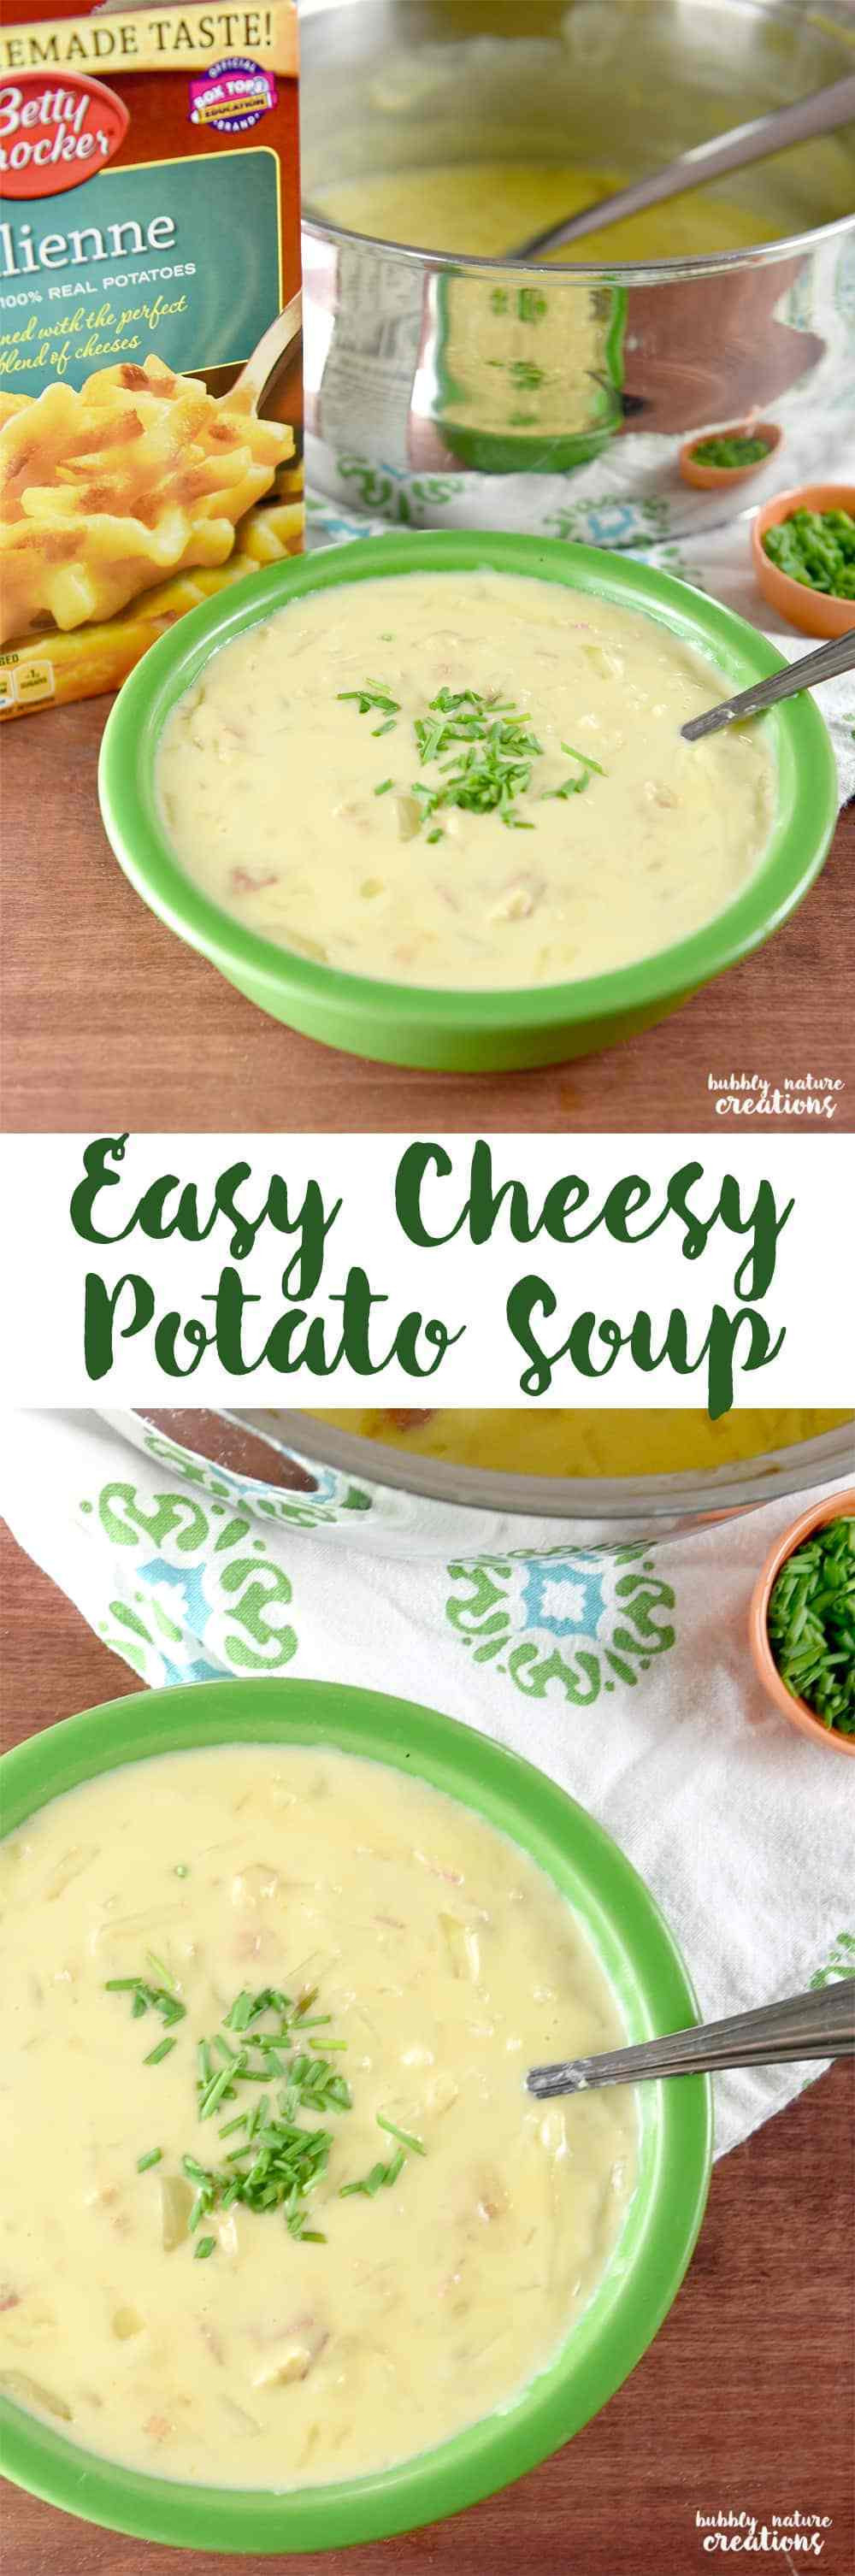 Easy Cheesy Potato Soup
 Easy Cheesy Potato Soup Sprinkle Some Fun